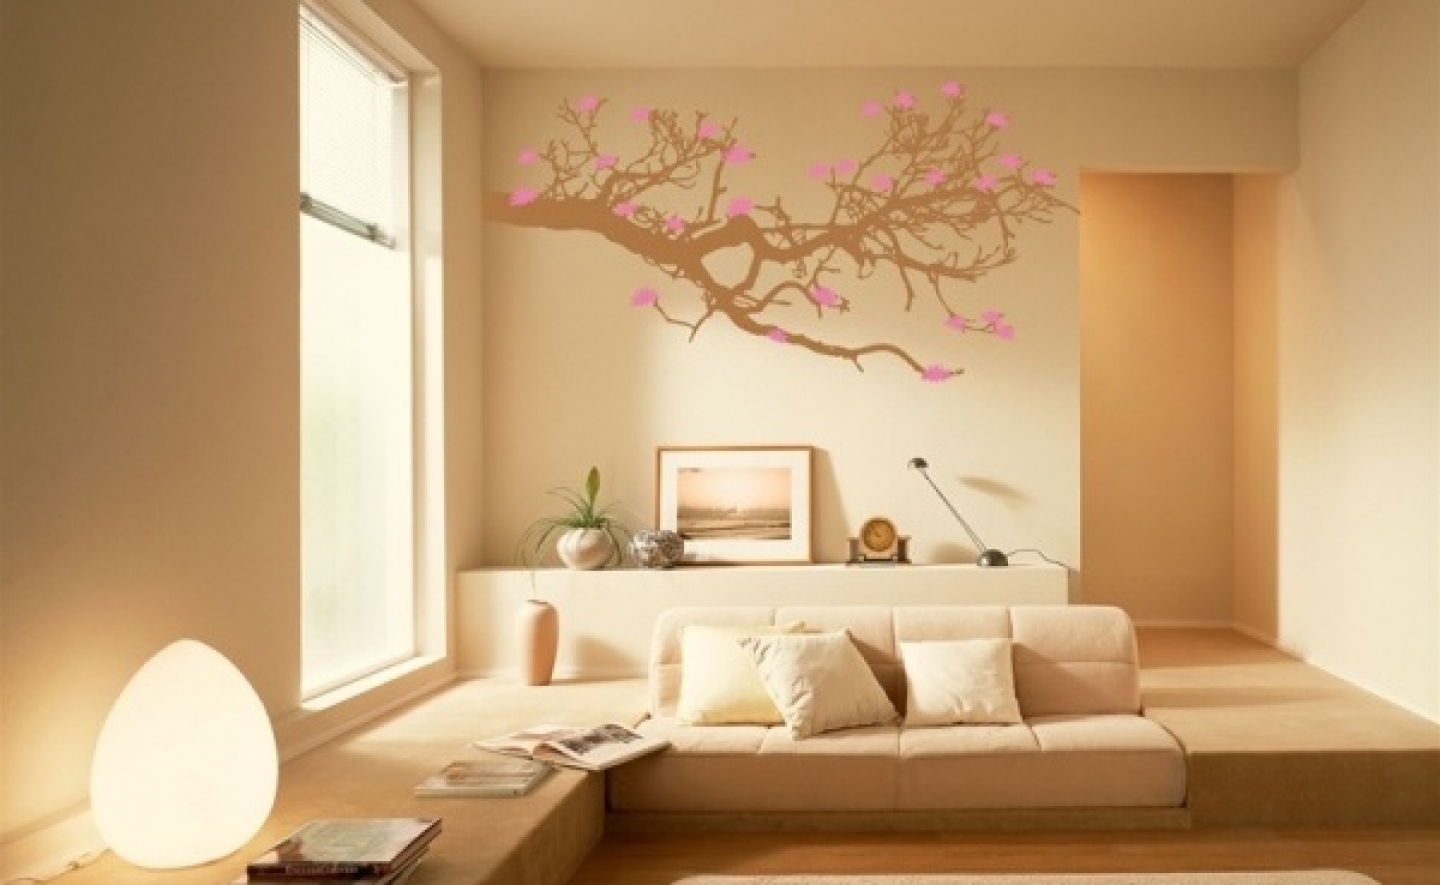 Wallpaper interior designs wall painting design ideas fun interior 1440x885